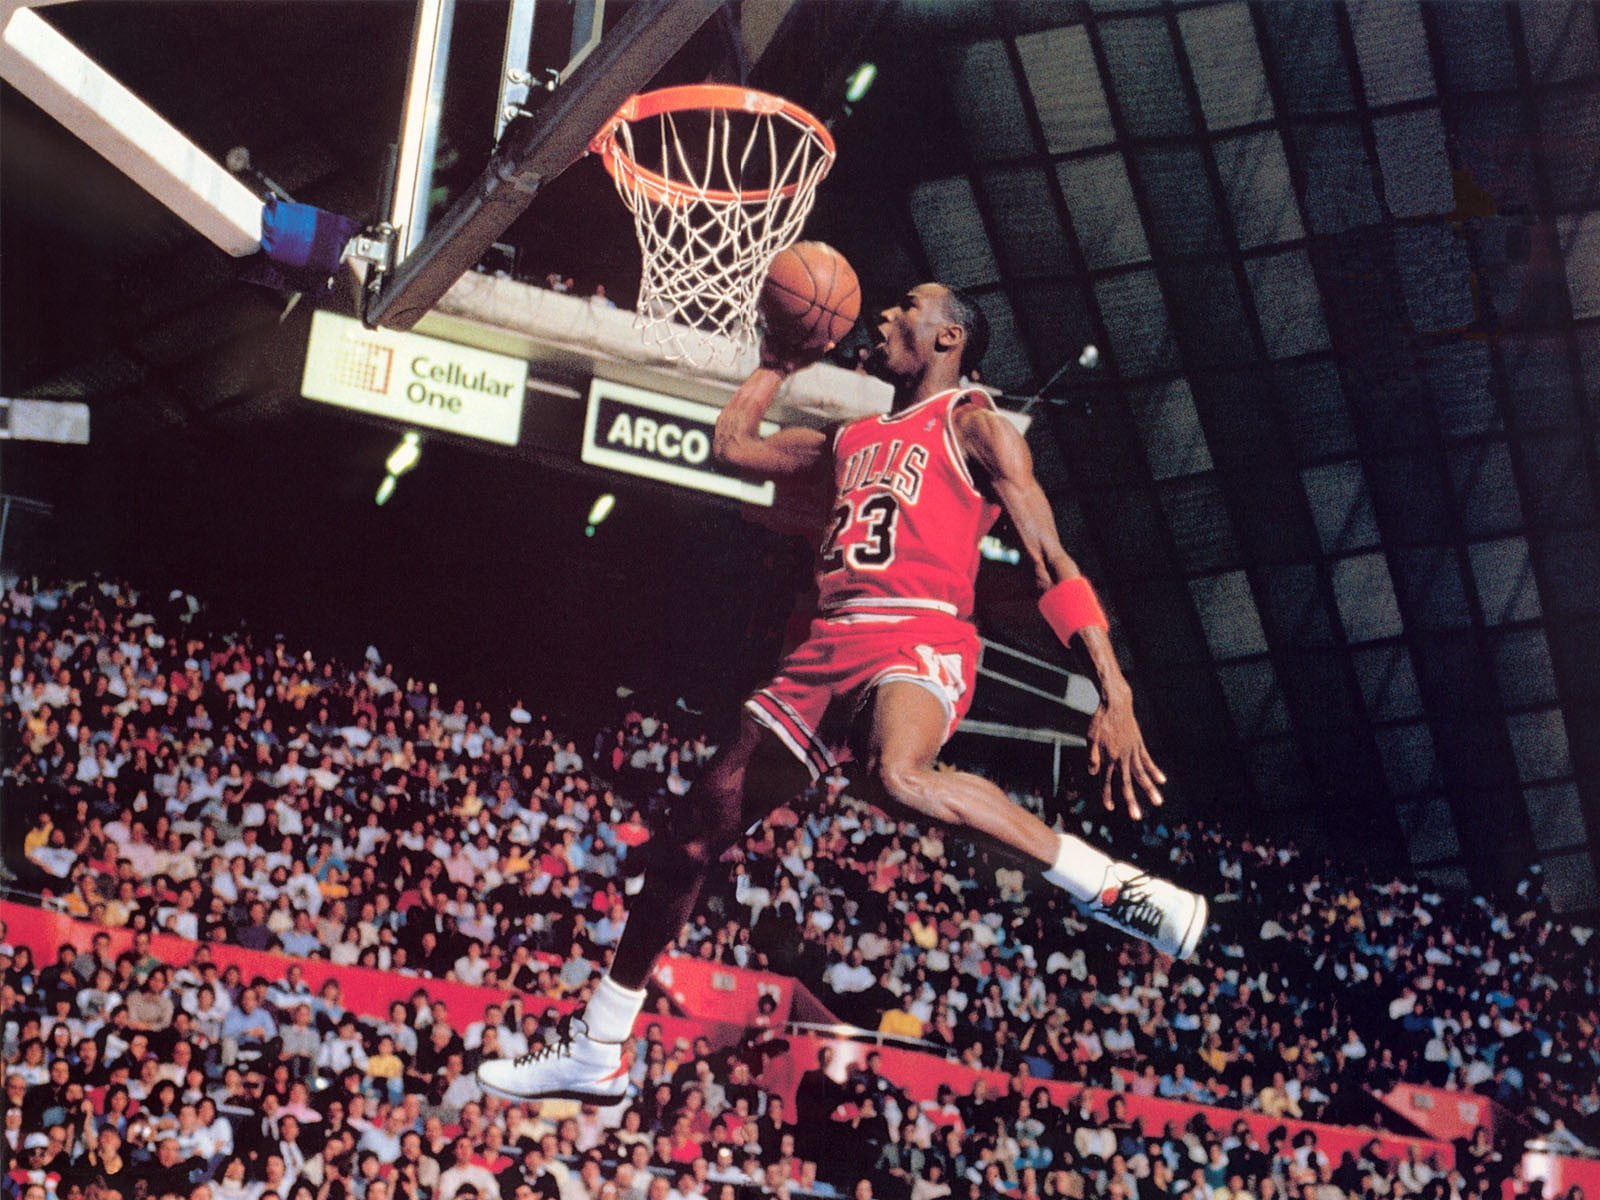 fond d'écran michael jordan,mouvements de basket ball,joueur de basketball,basketball,ventilateur,slam dunk